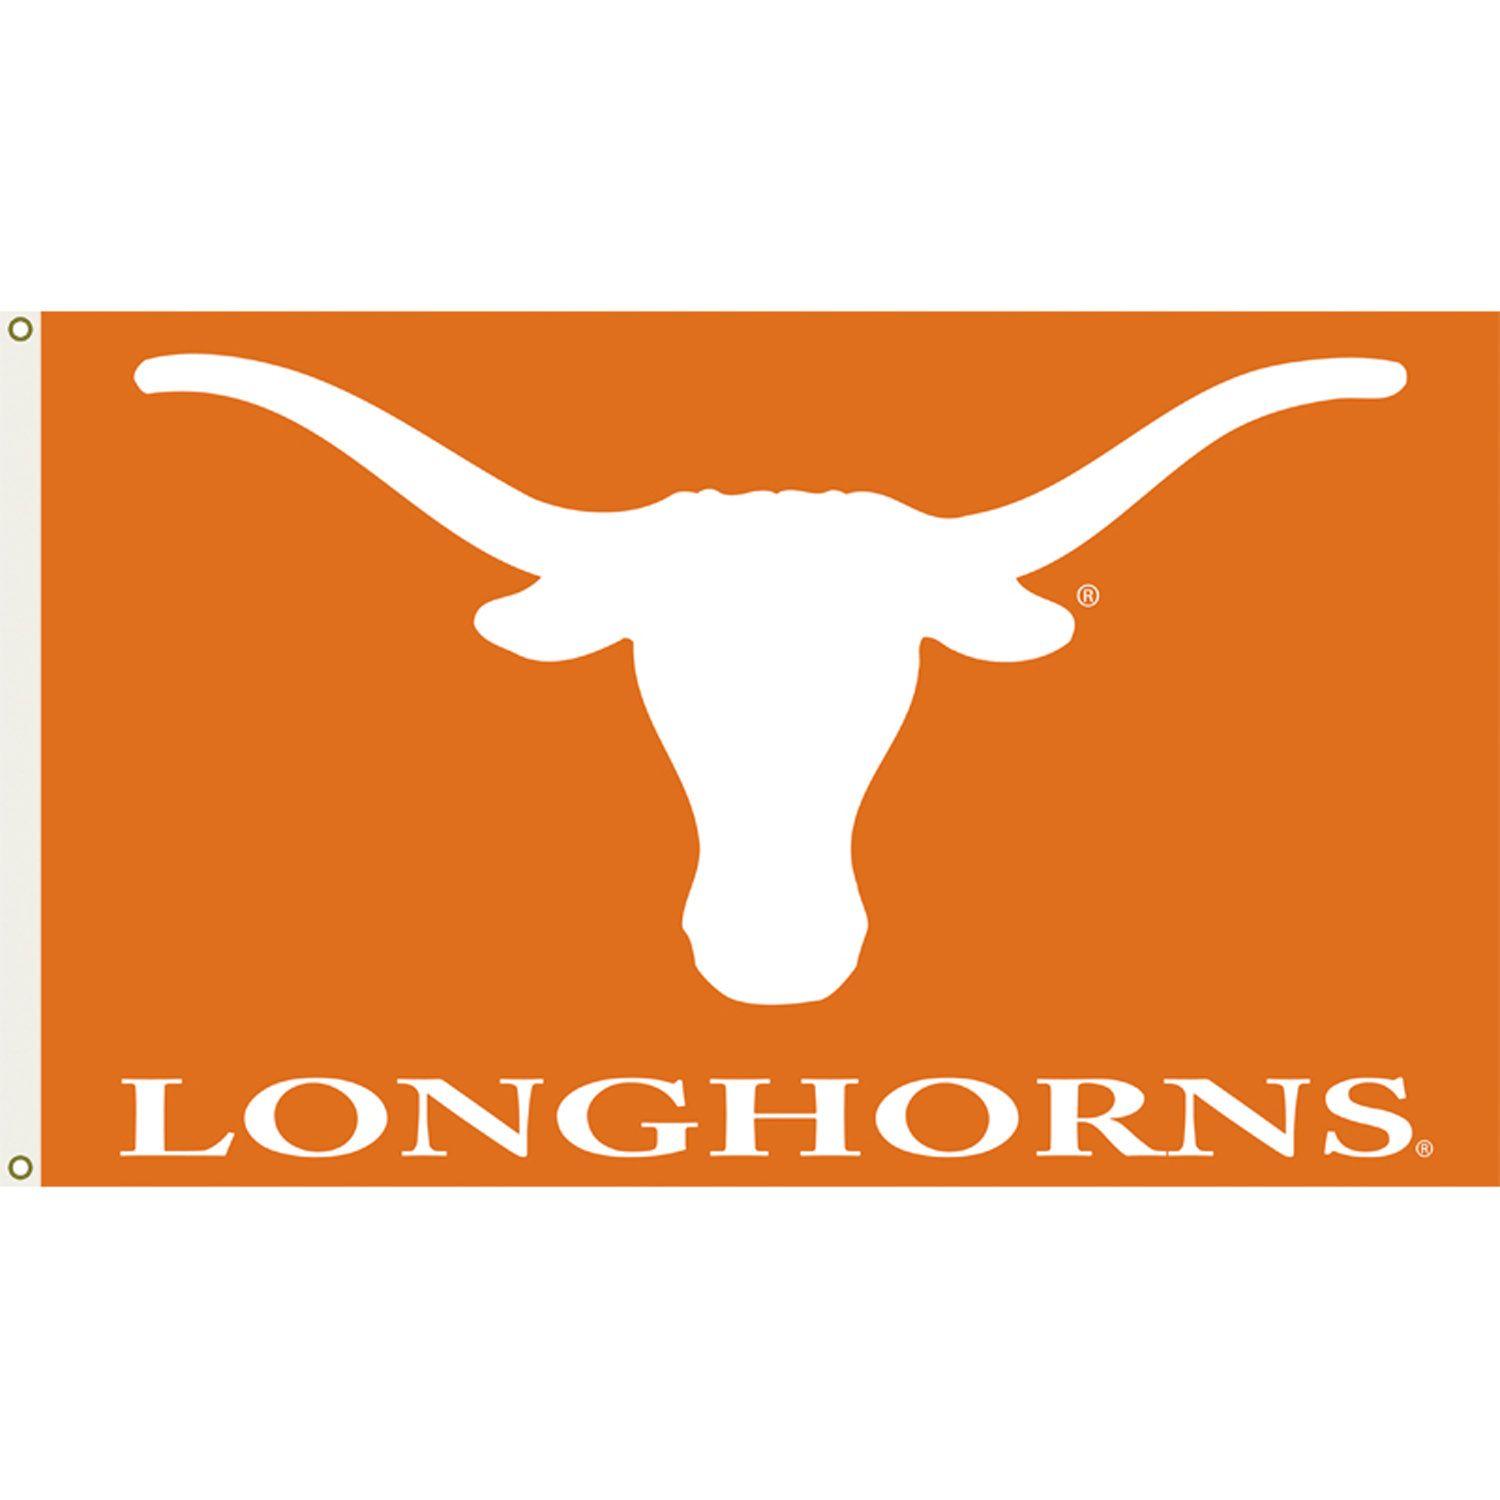 College Logos. longhorns logo d team flag texas longhorns 3ft x 5ft